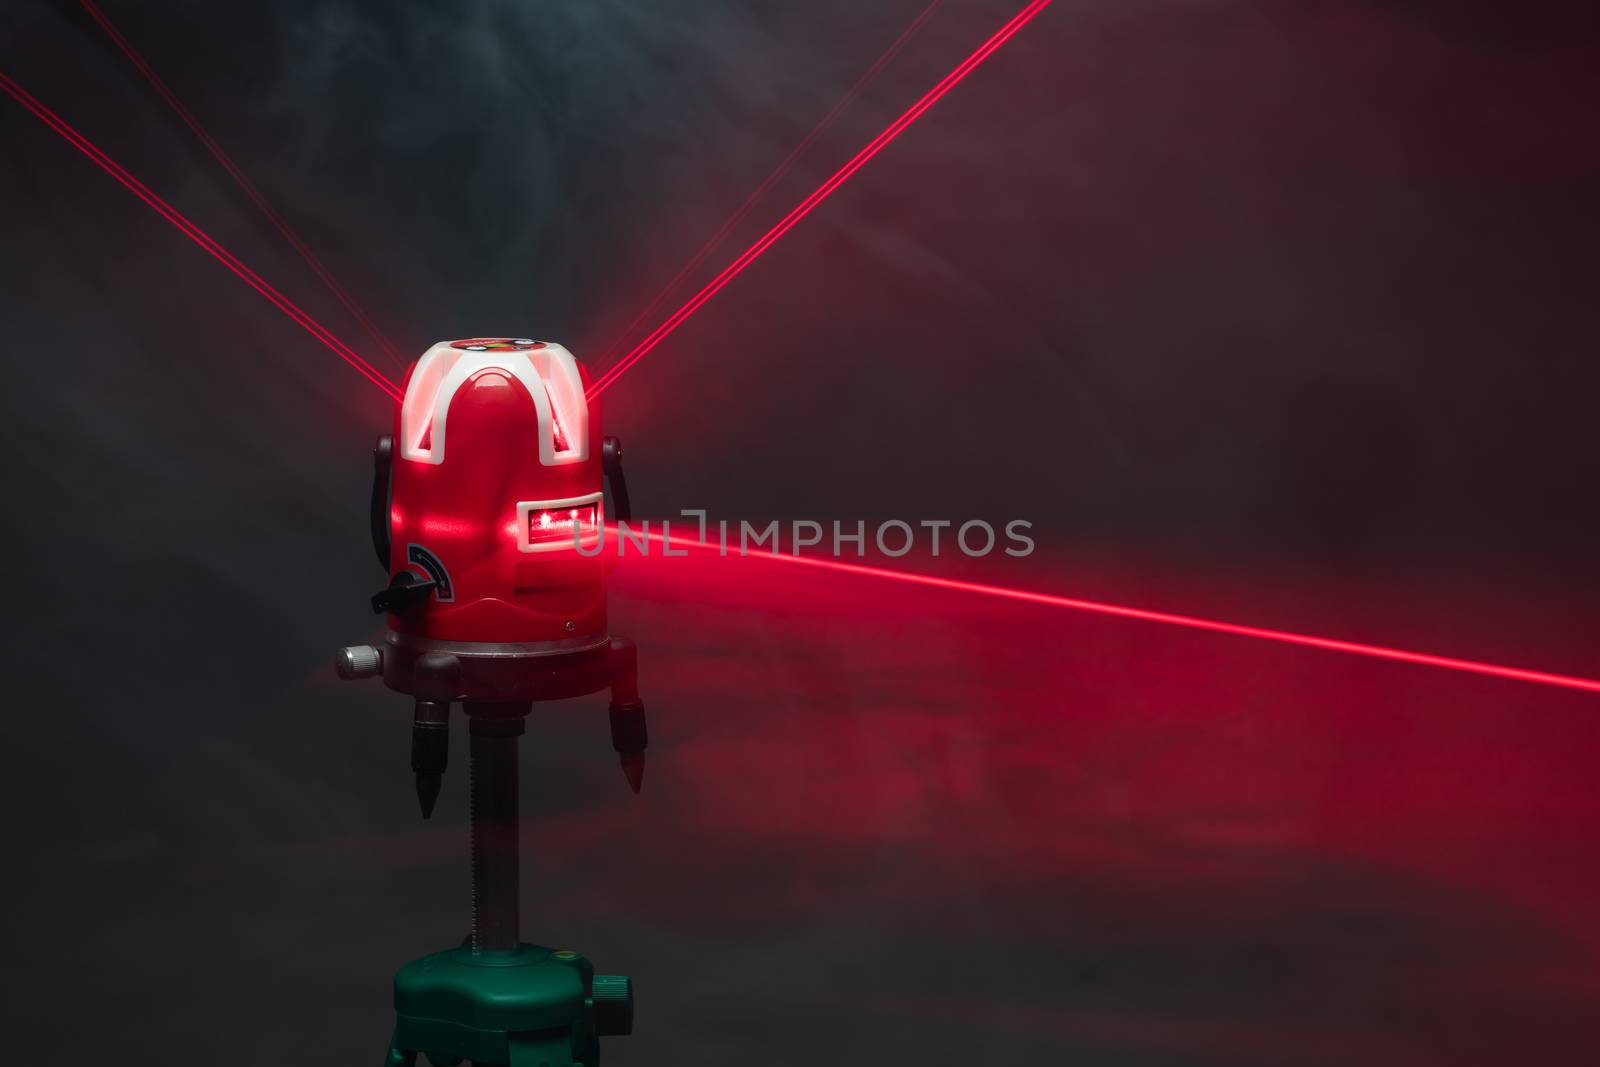 laser level tool red light beams in smoke by nikkytok